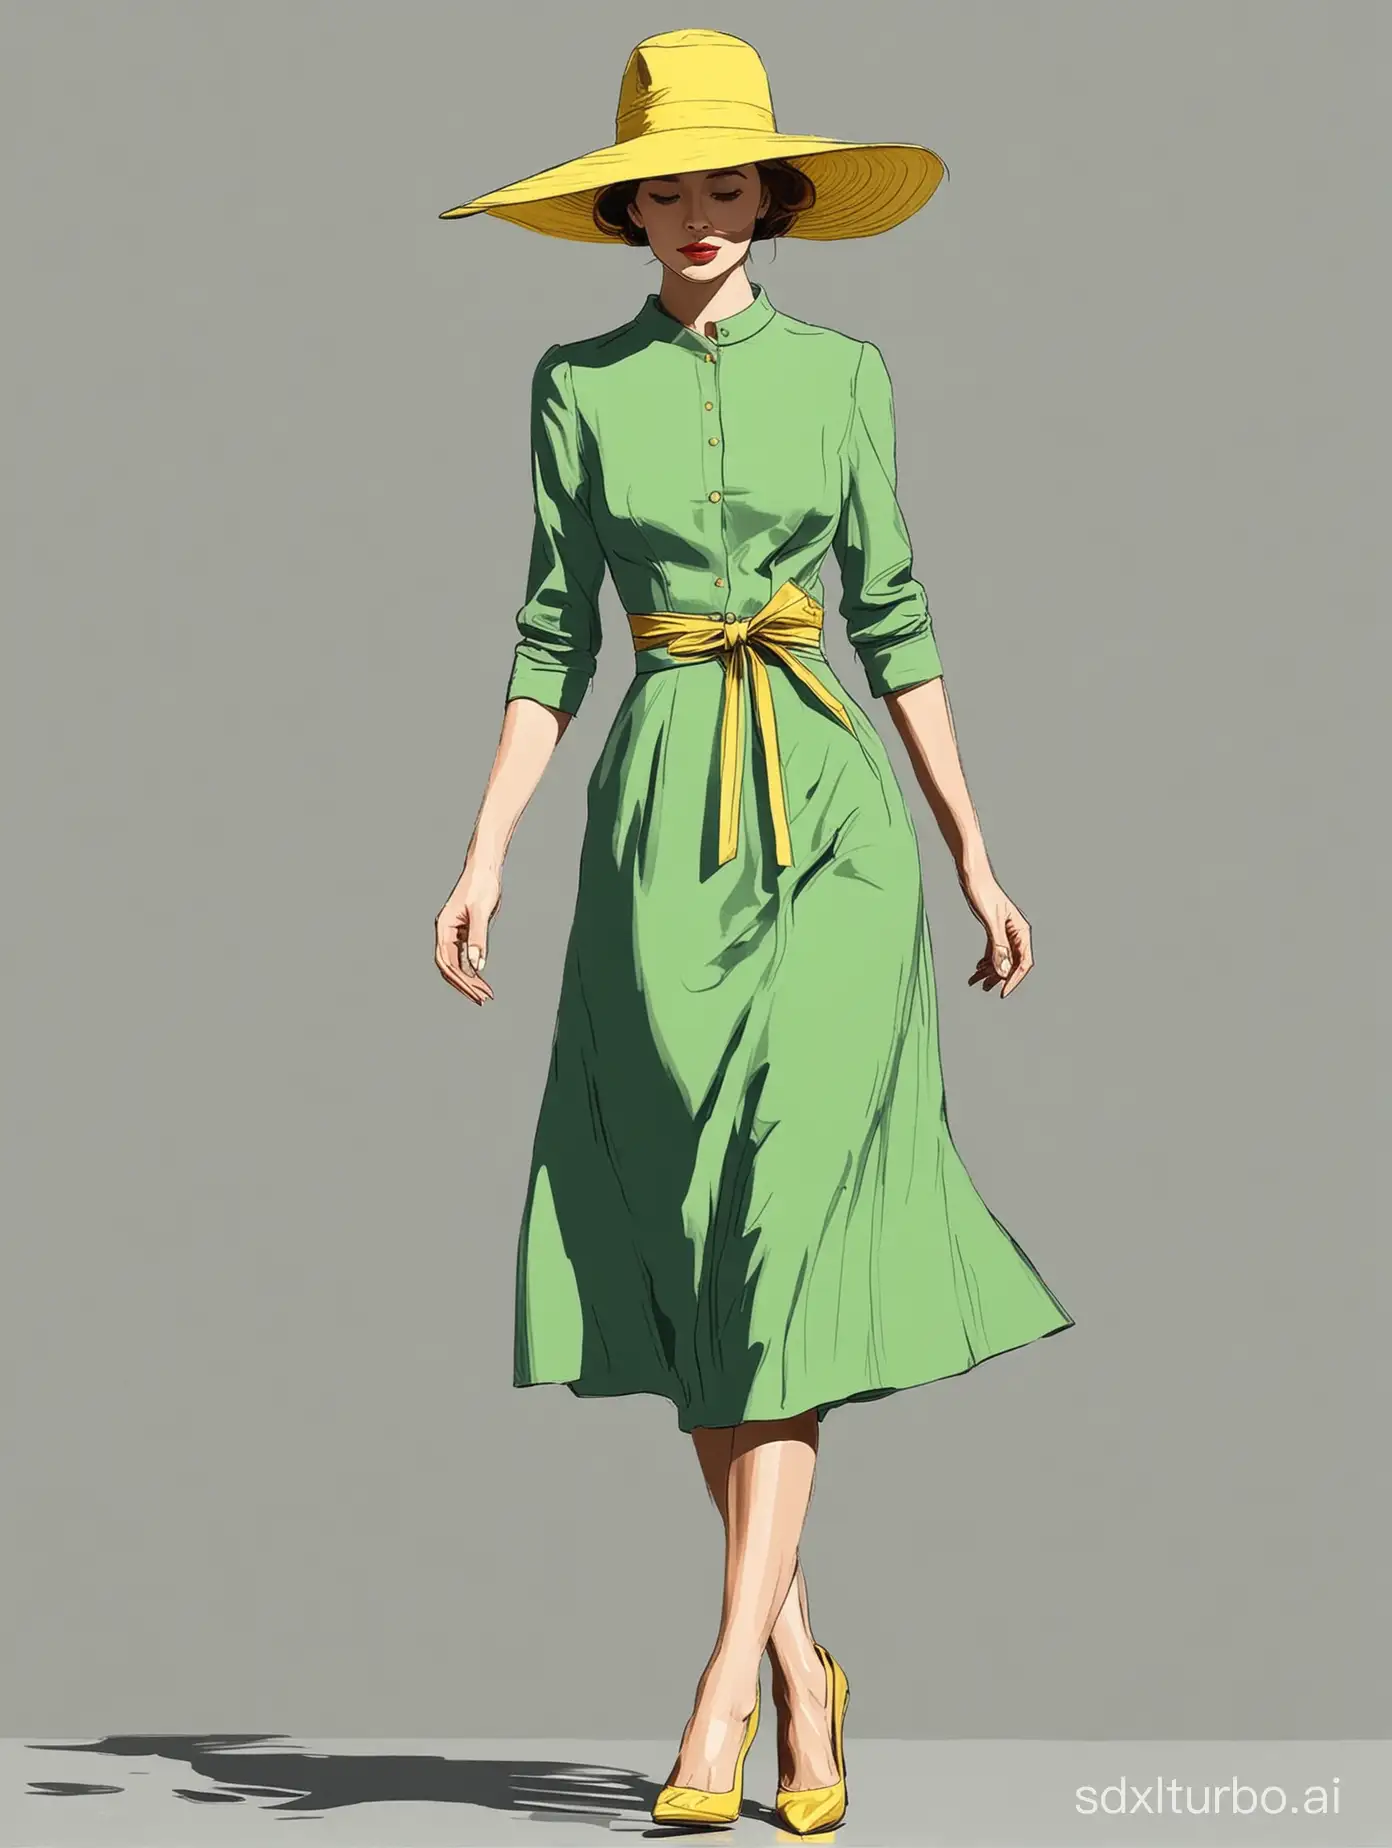 Elegant-Woman-in-Green-Dress-and-Yellow-Hat-Walking-on-Runway